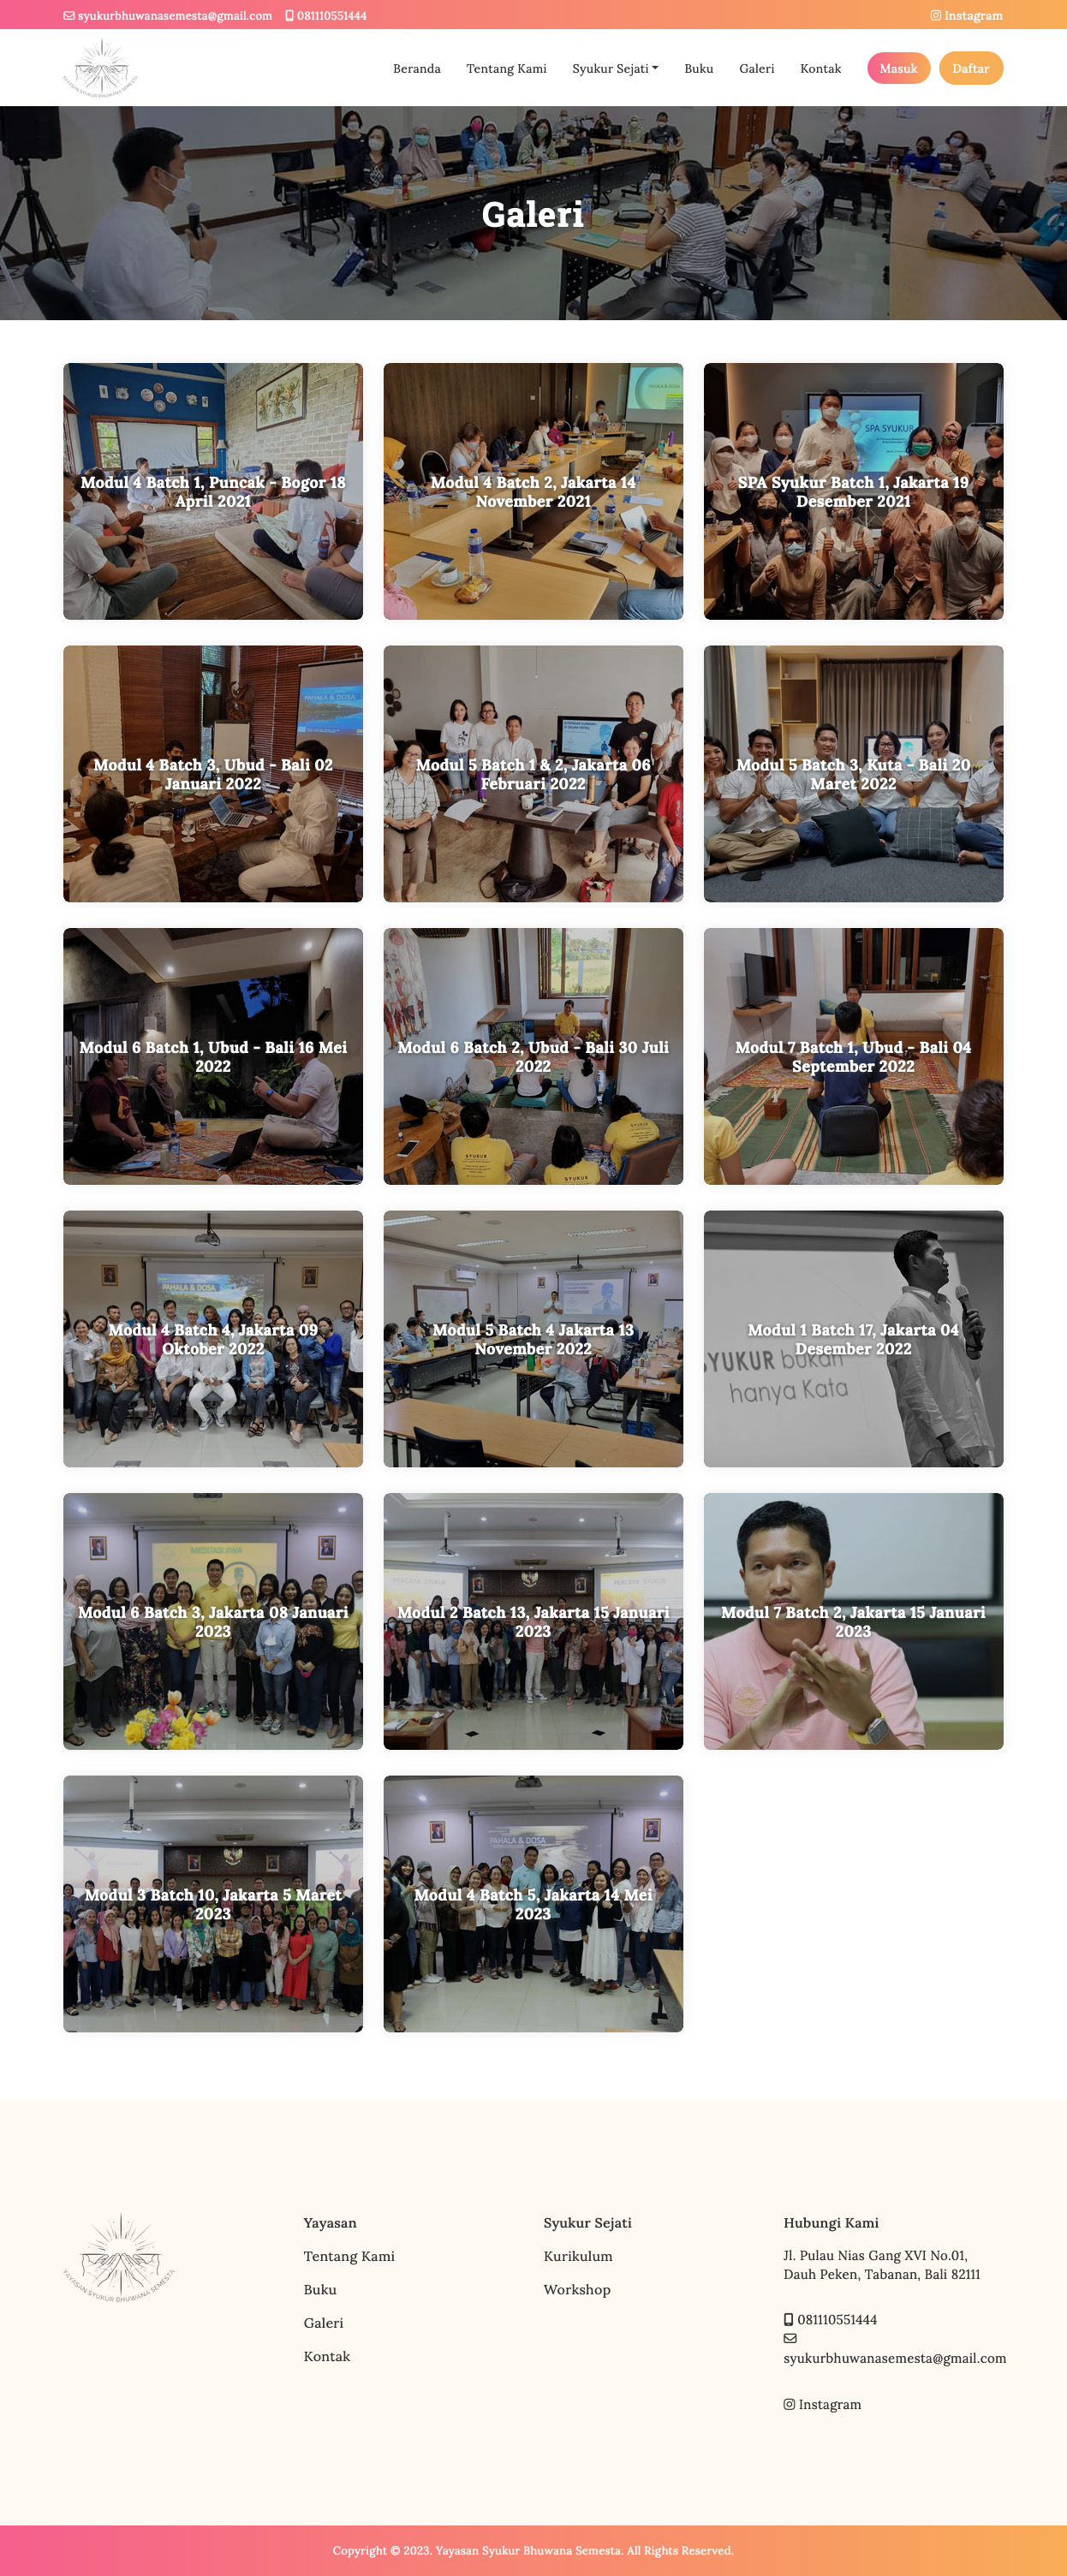 Pelatihan Online - Yayasan Syukur Bhuwana Semesta - Gallery - Galeri - Codenesia - Code Smart Play Hard